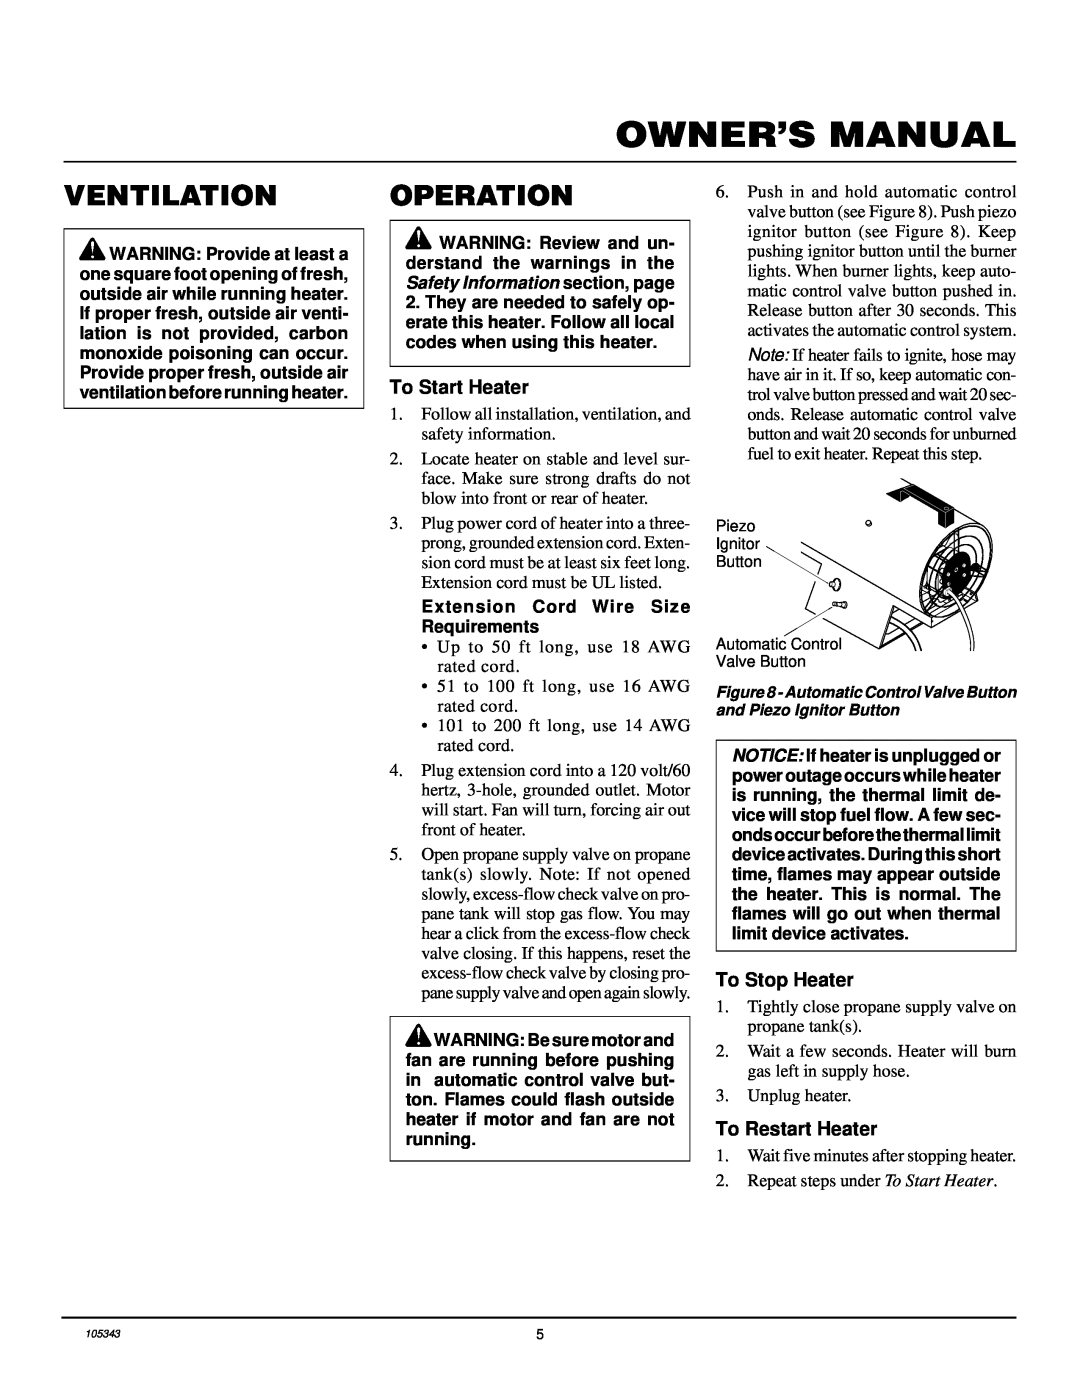 Desa RM30LP owner manual Ventilation, Operation, To Start Heater, To Stop Heater, To Restart Heater 